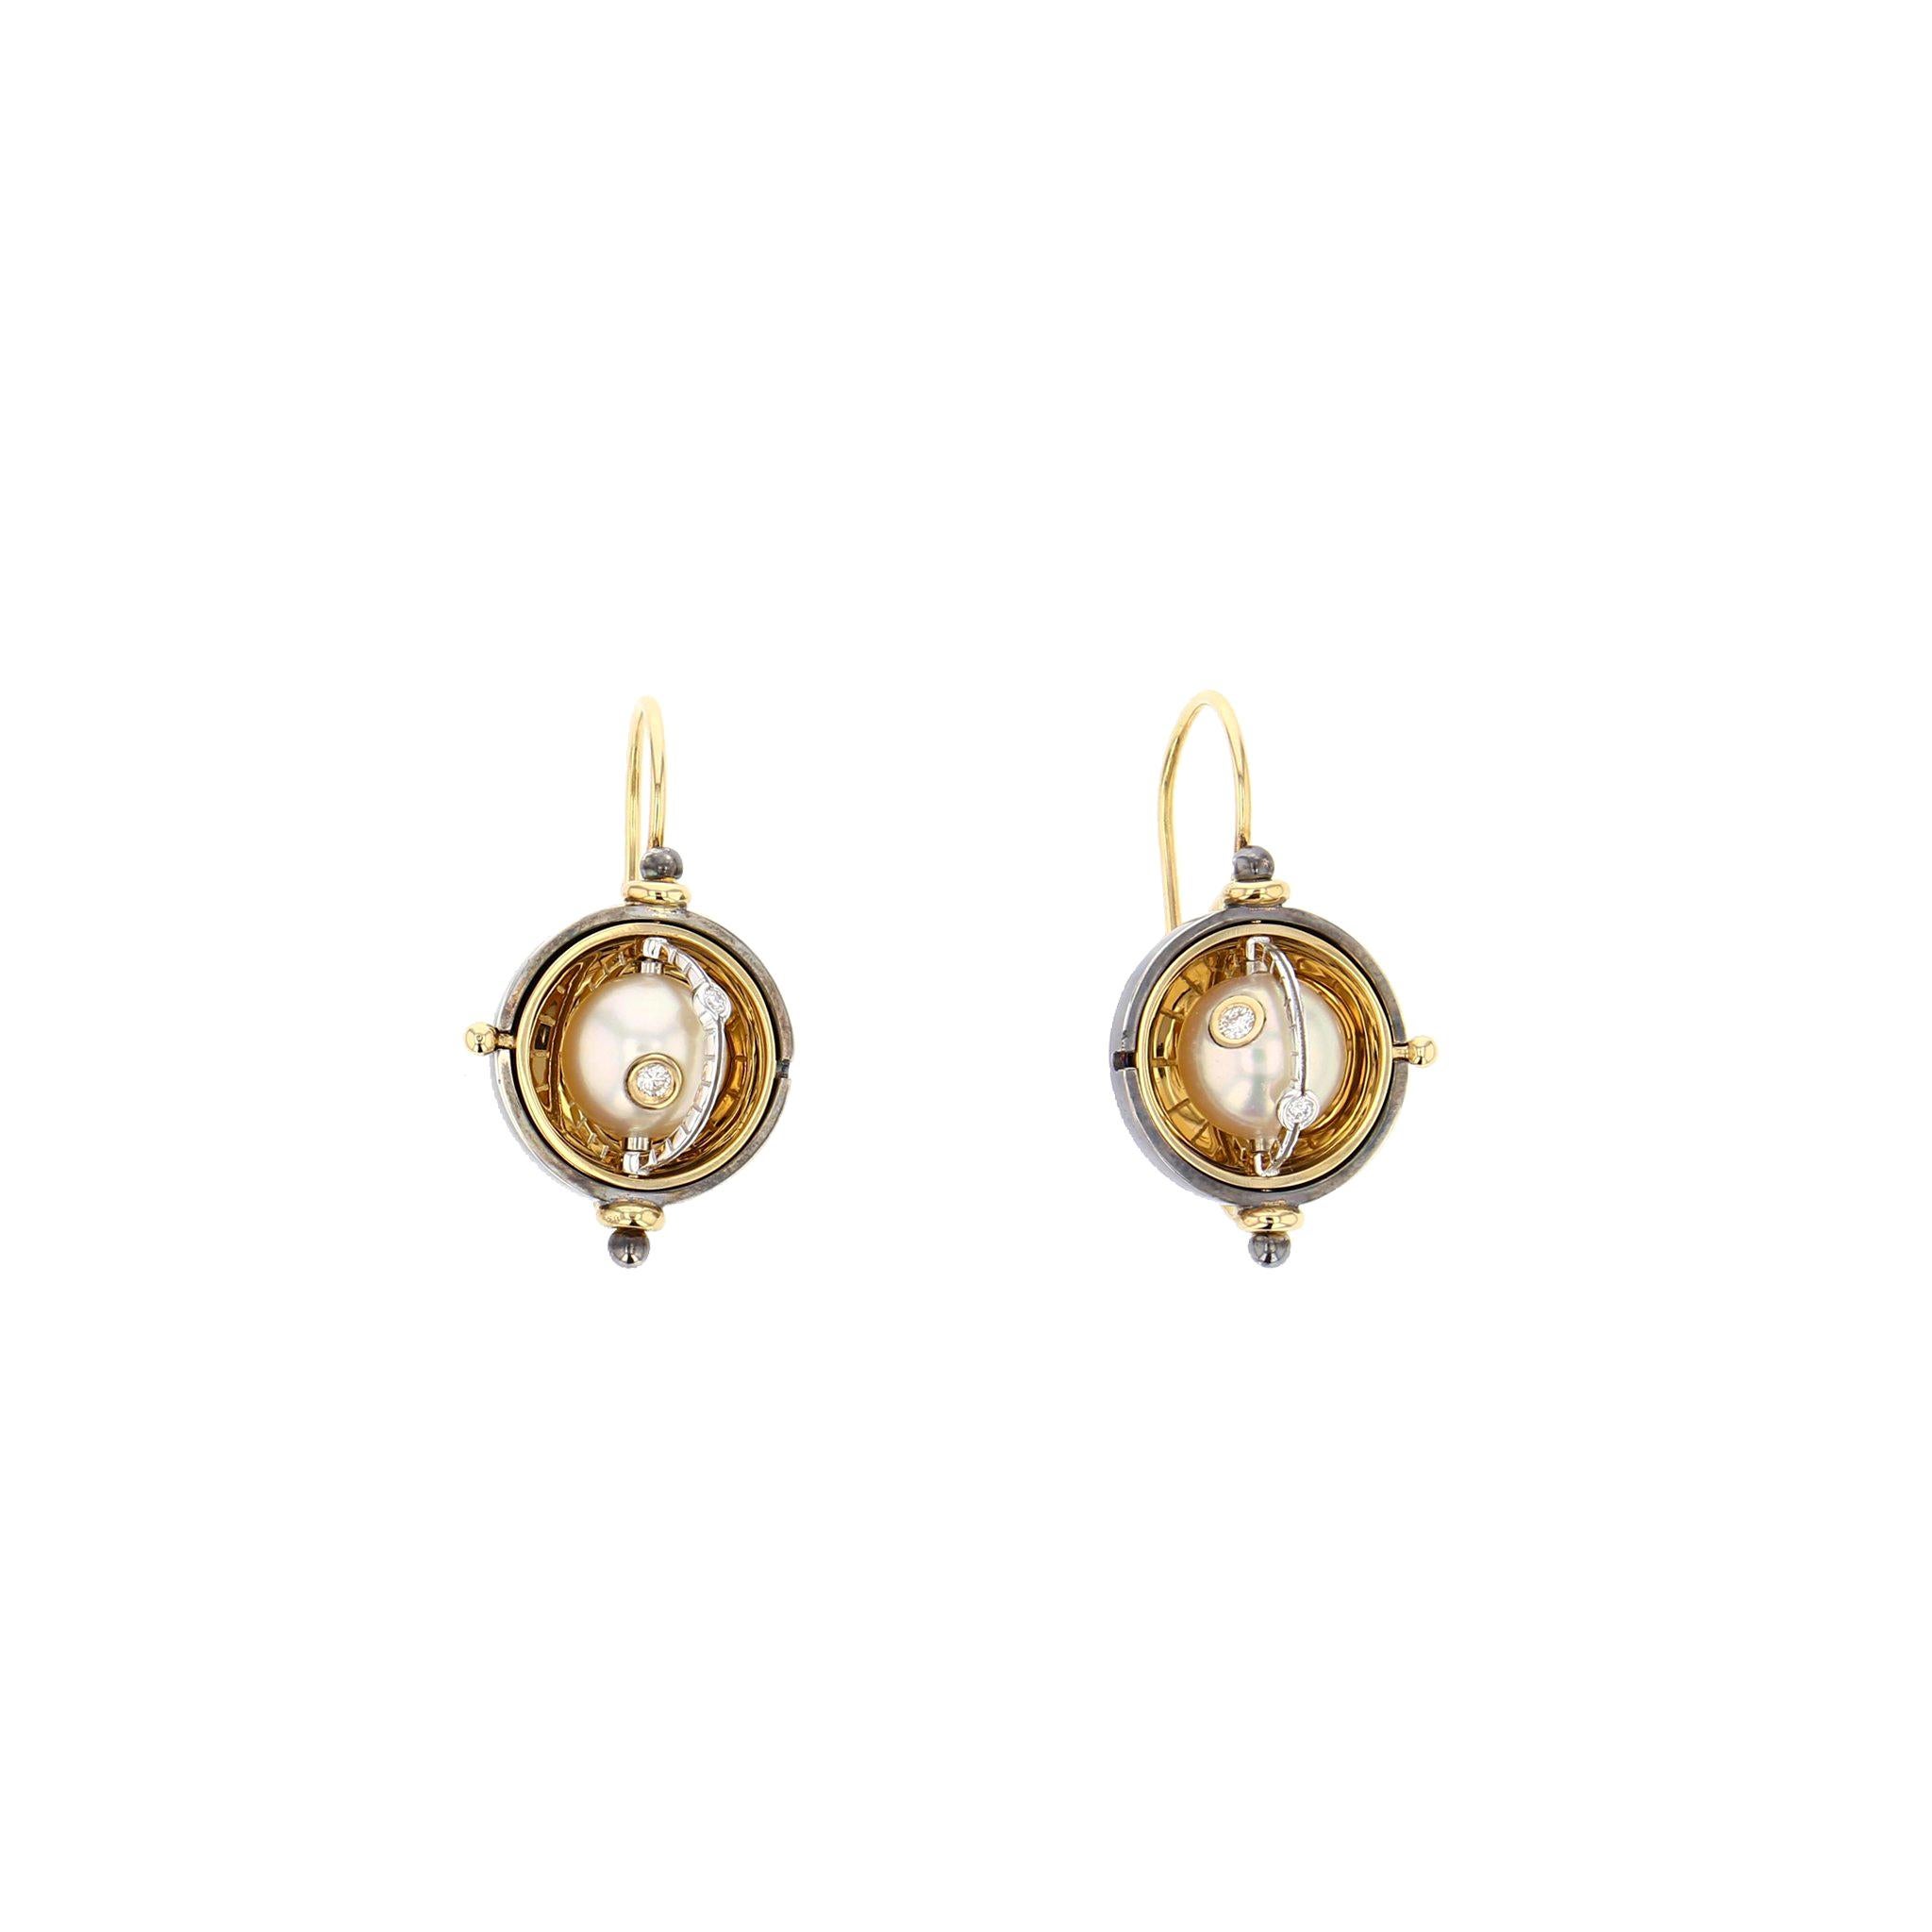 Diamonds Akoya Pearls Sphere Earrings in 18k yellow gold by Elie Top